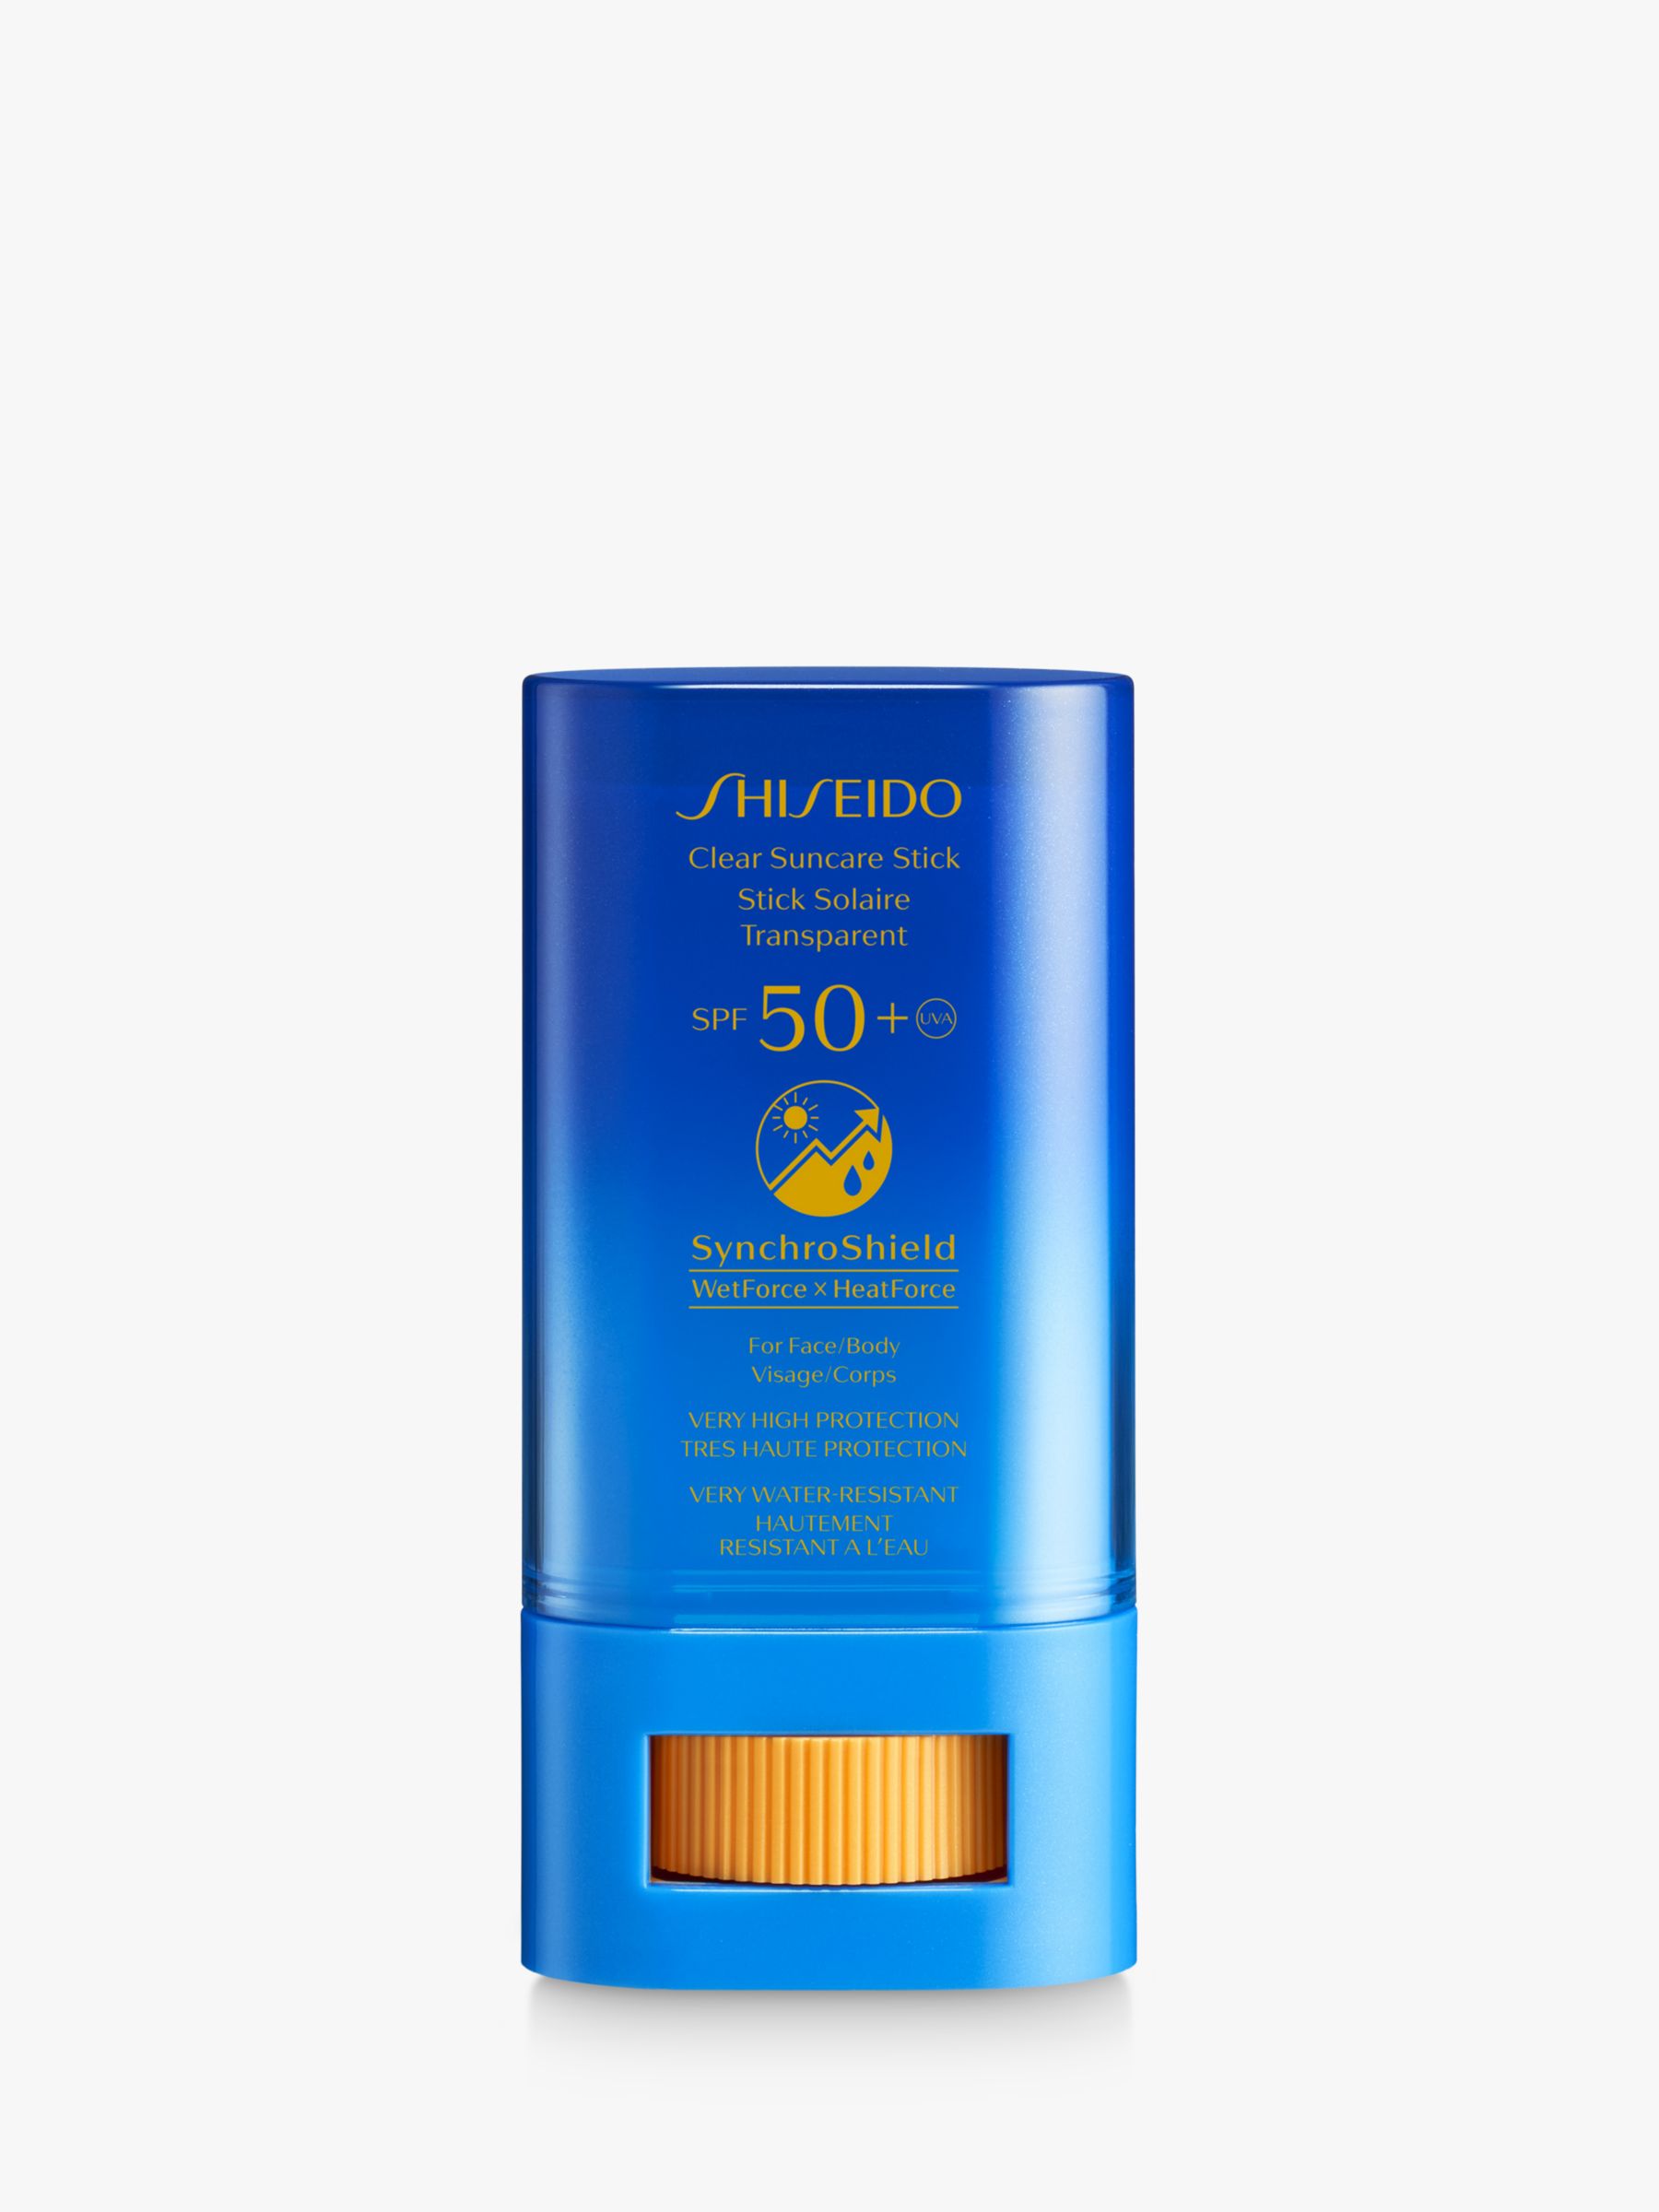 Shiseido Clear Suncare Stick SPF 50+, 20g 1